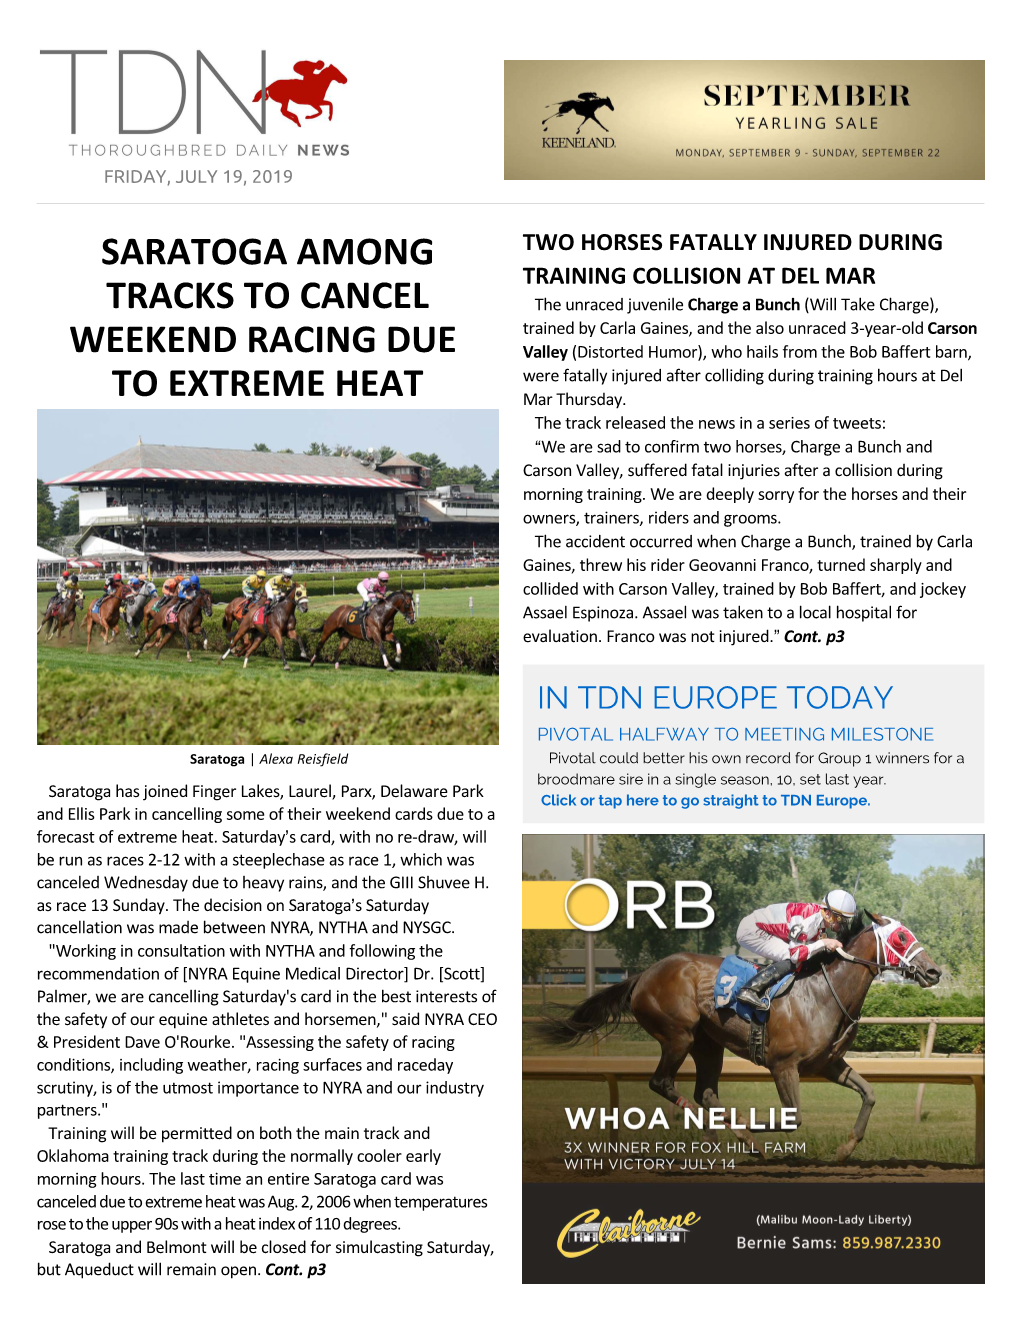 Saratoga Among Tracks to Cancel Weekend Racing Due to Extreme Heat